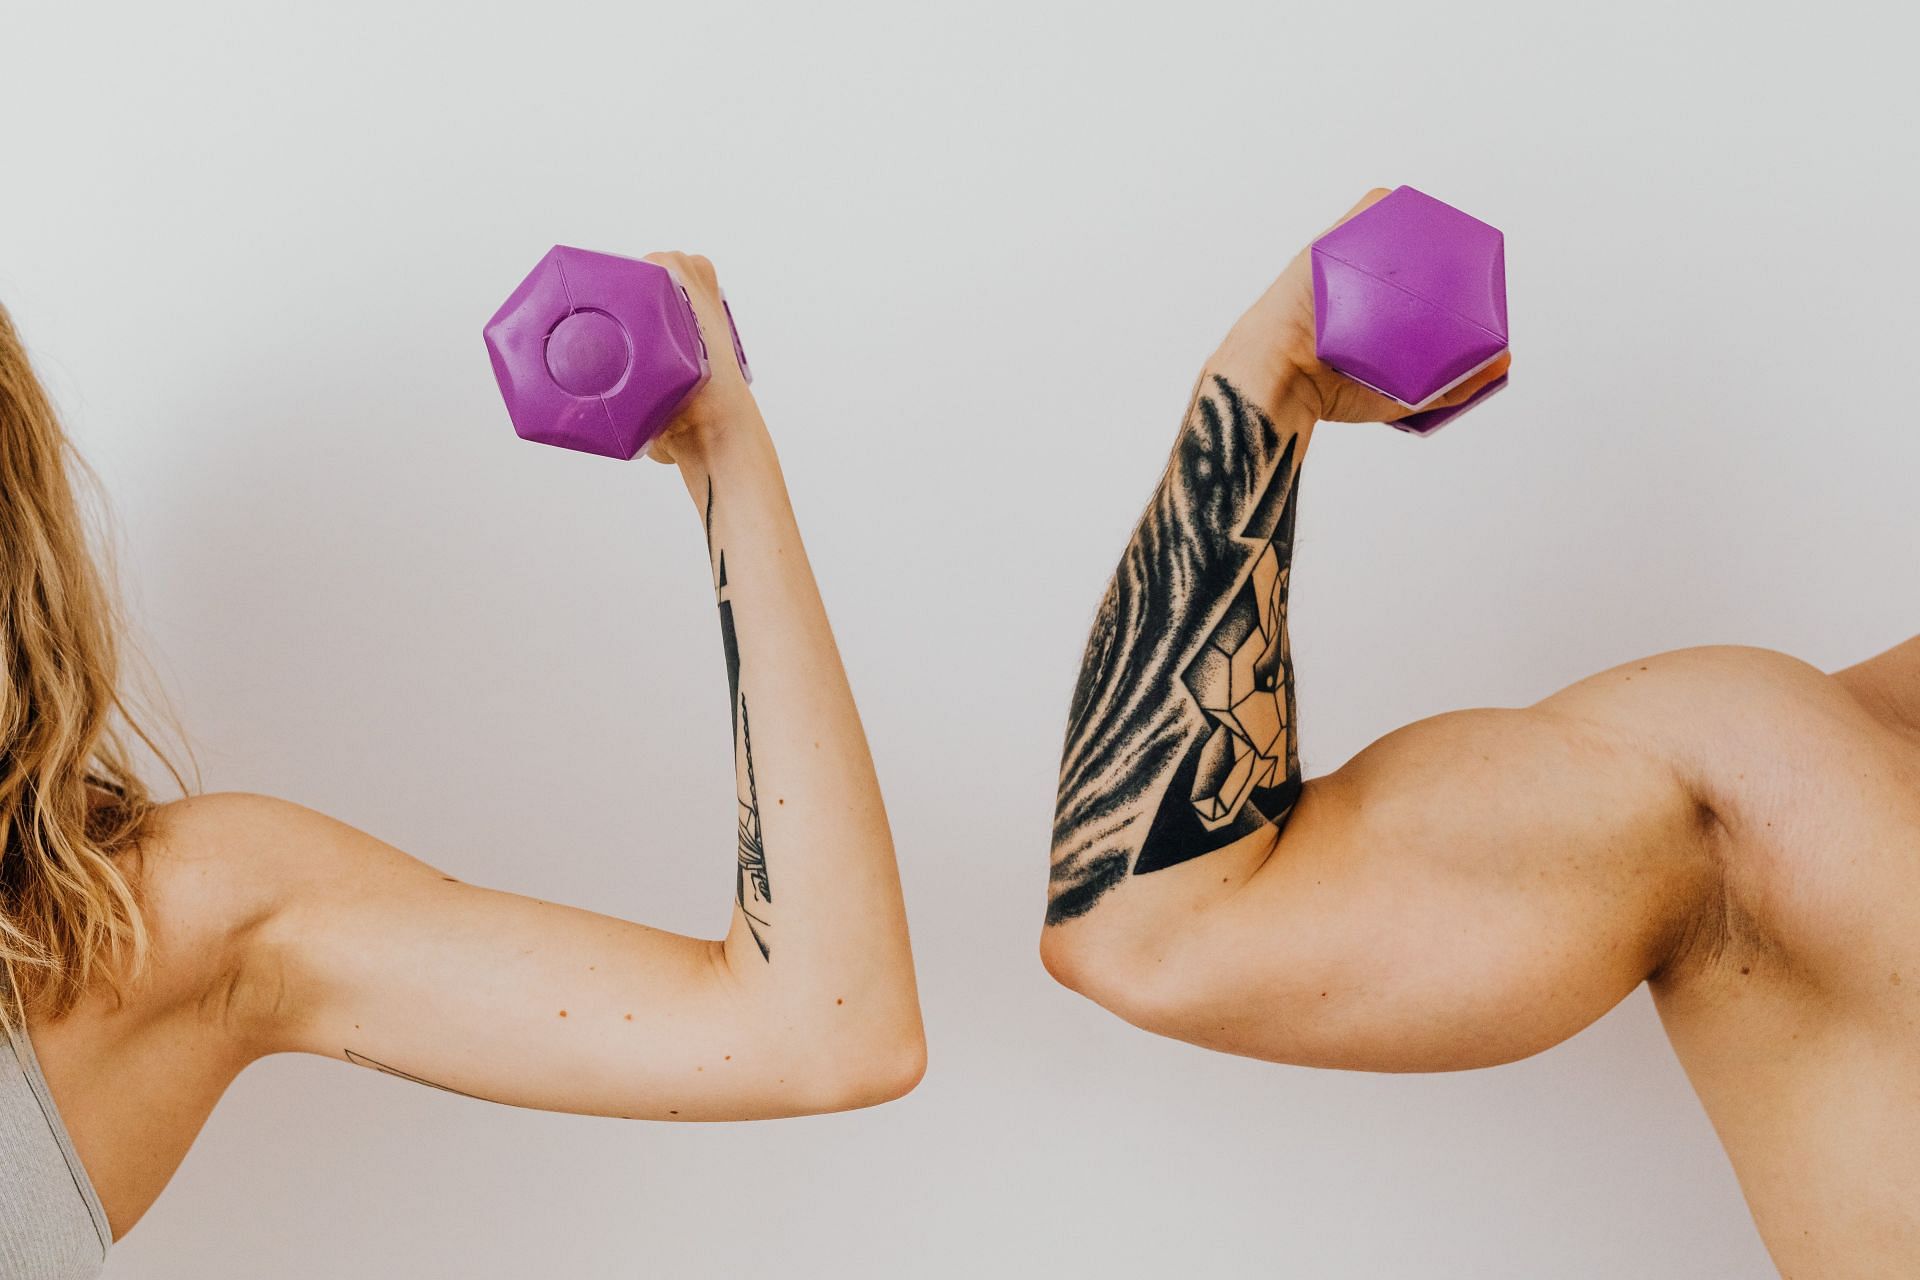 5 best ways to get bigger biceps at home in one month/ Image by Karolina Grabowska - Pexels